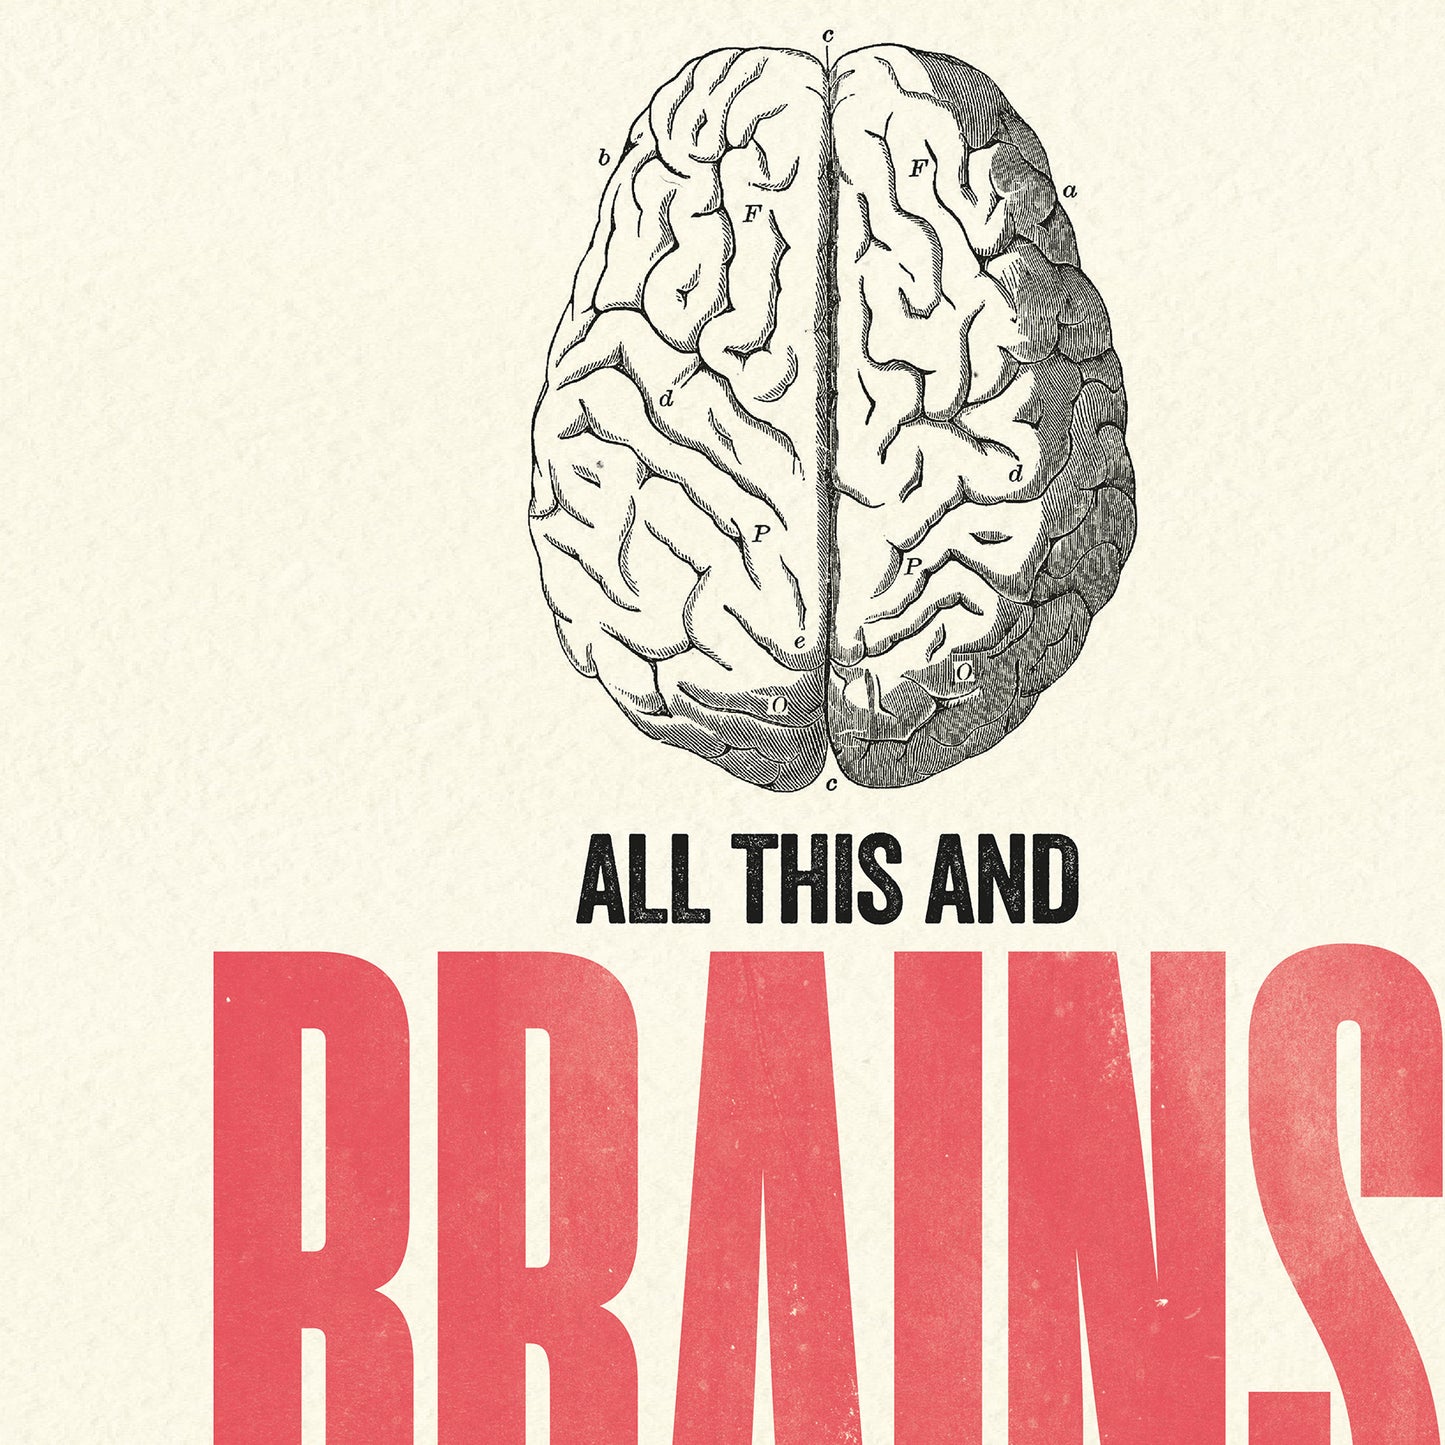 Modern Life A3 print: Brains